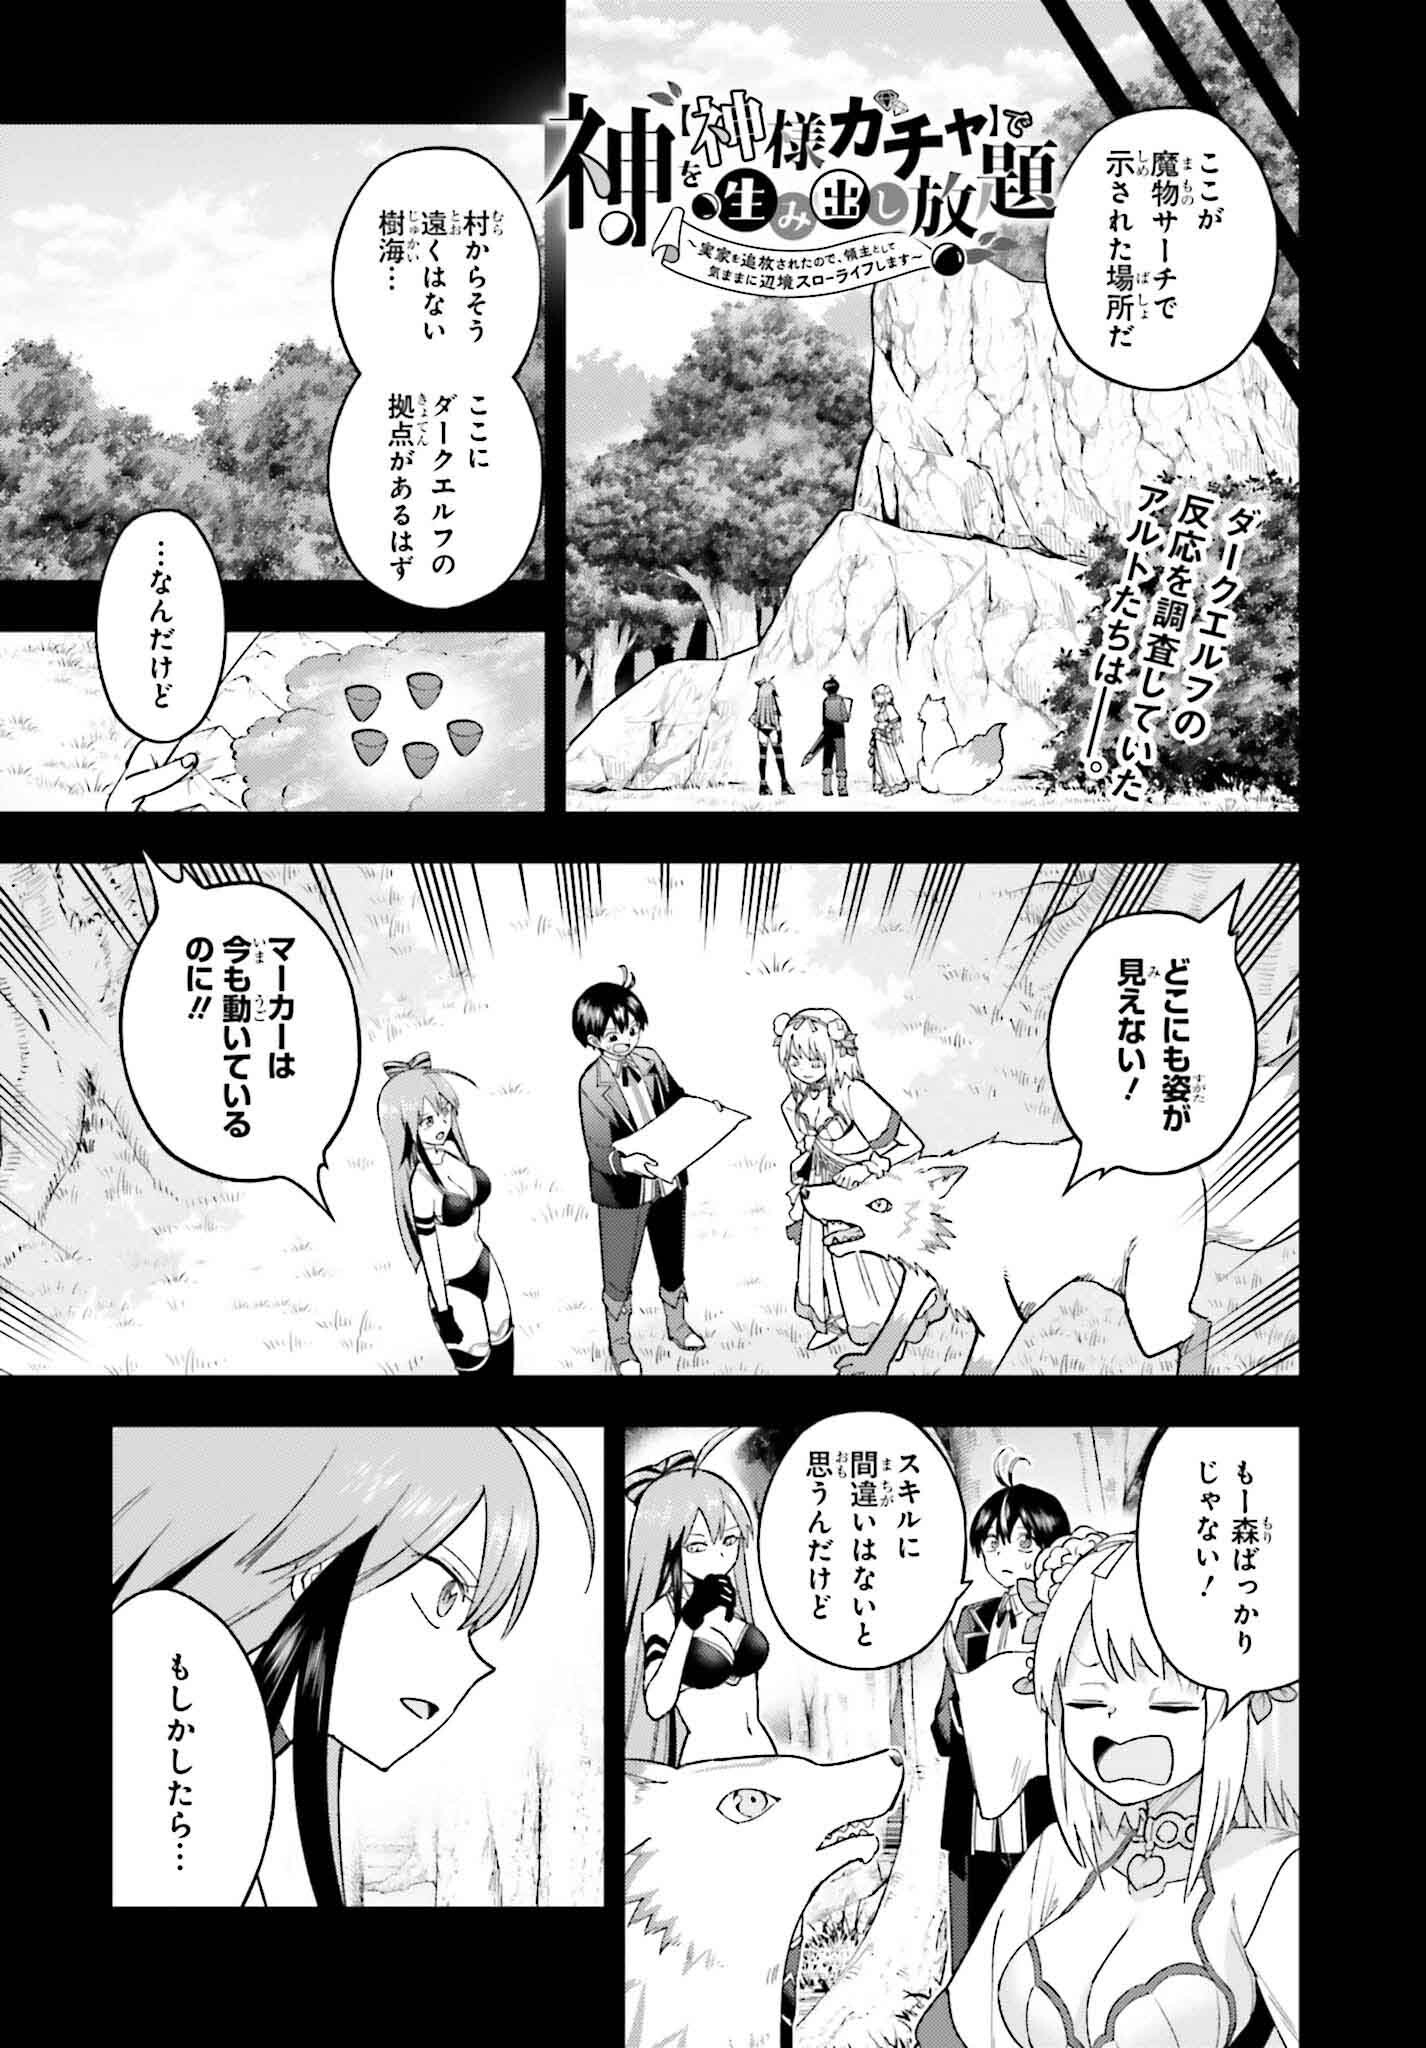 Kami o Kamisama Gacha de Umidashi Houdai - Chapter 16 - Page 1